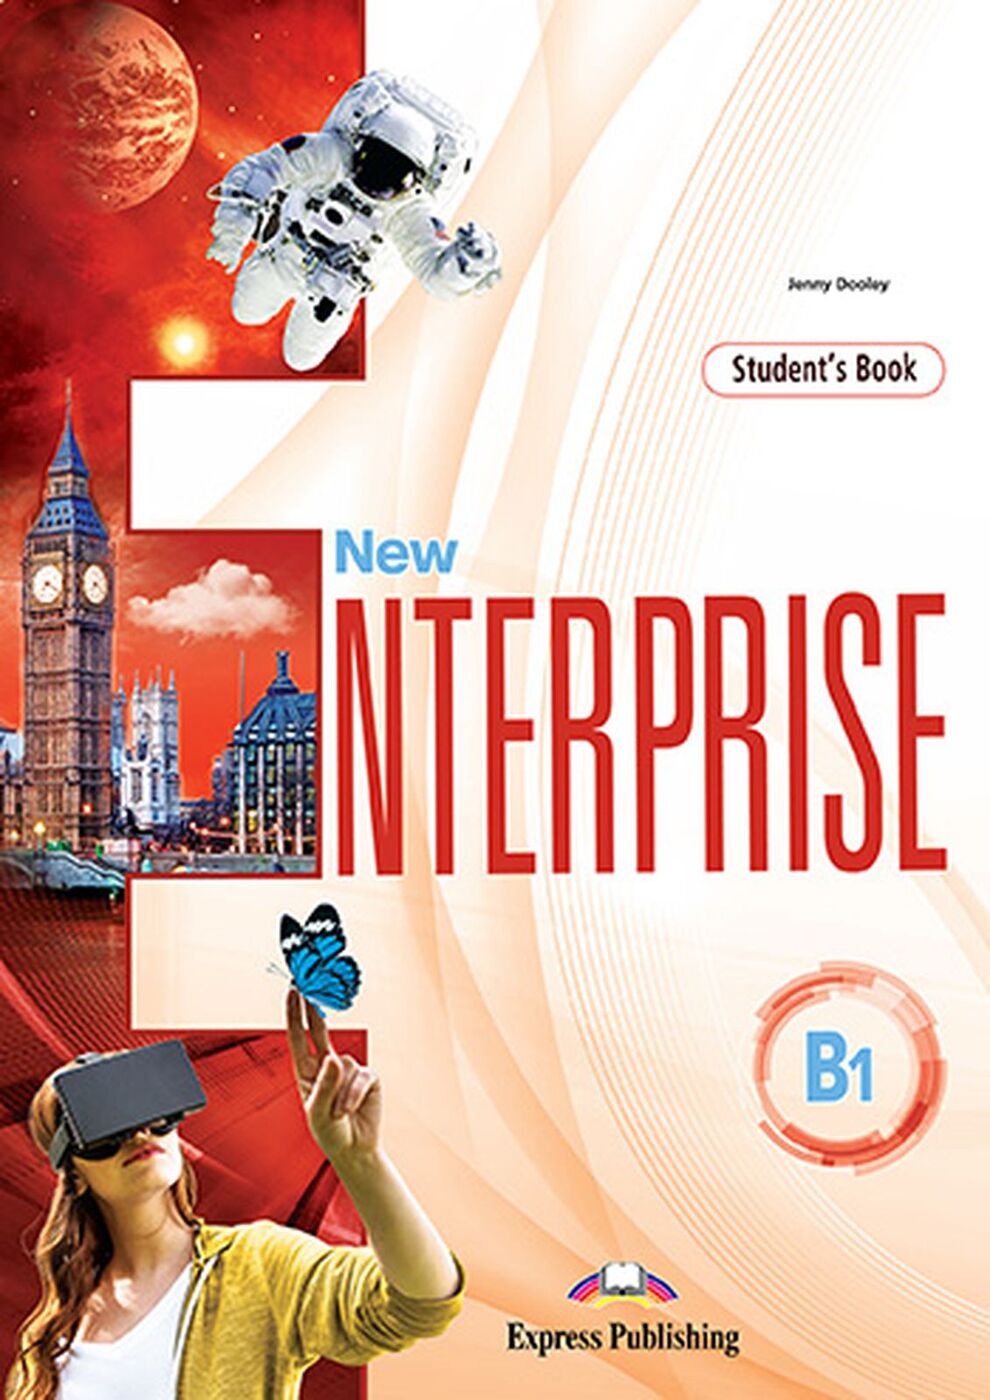 Enterprise student's book